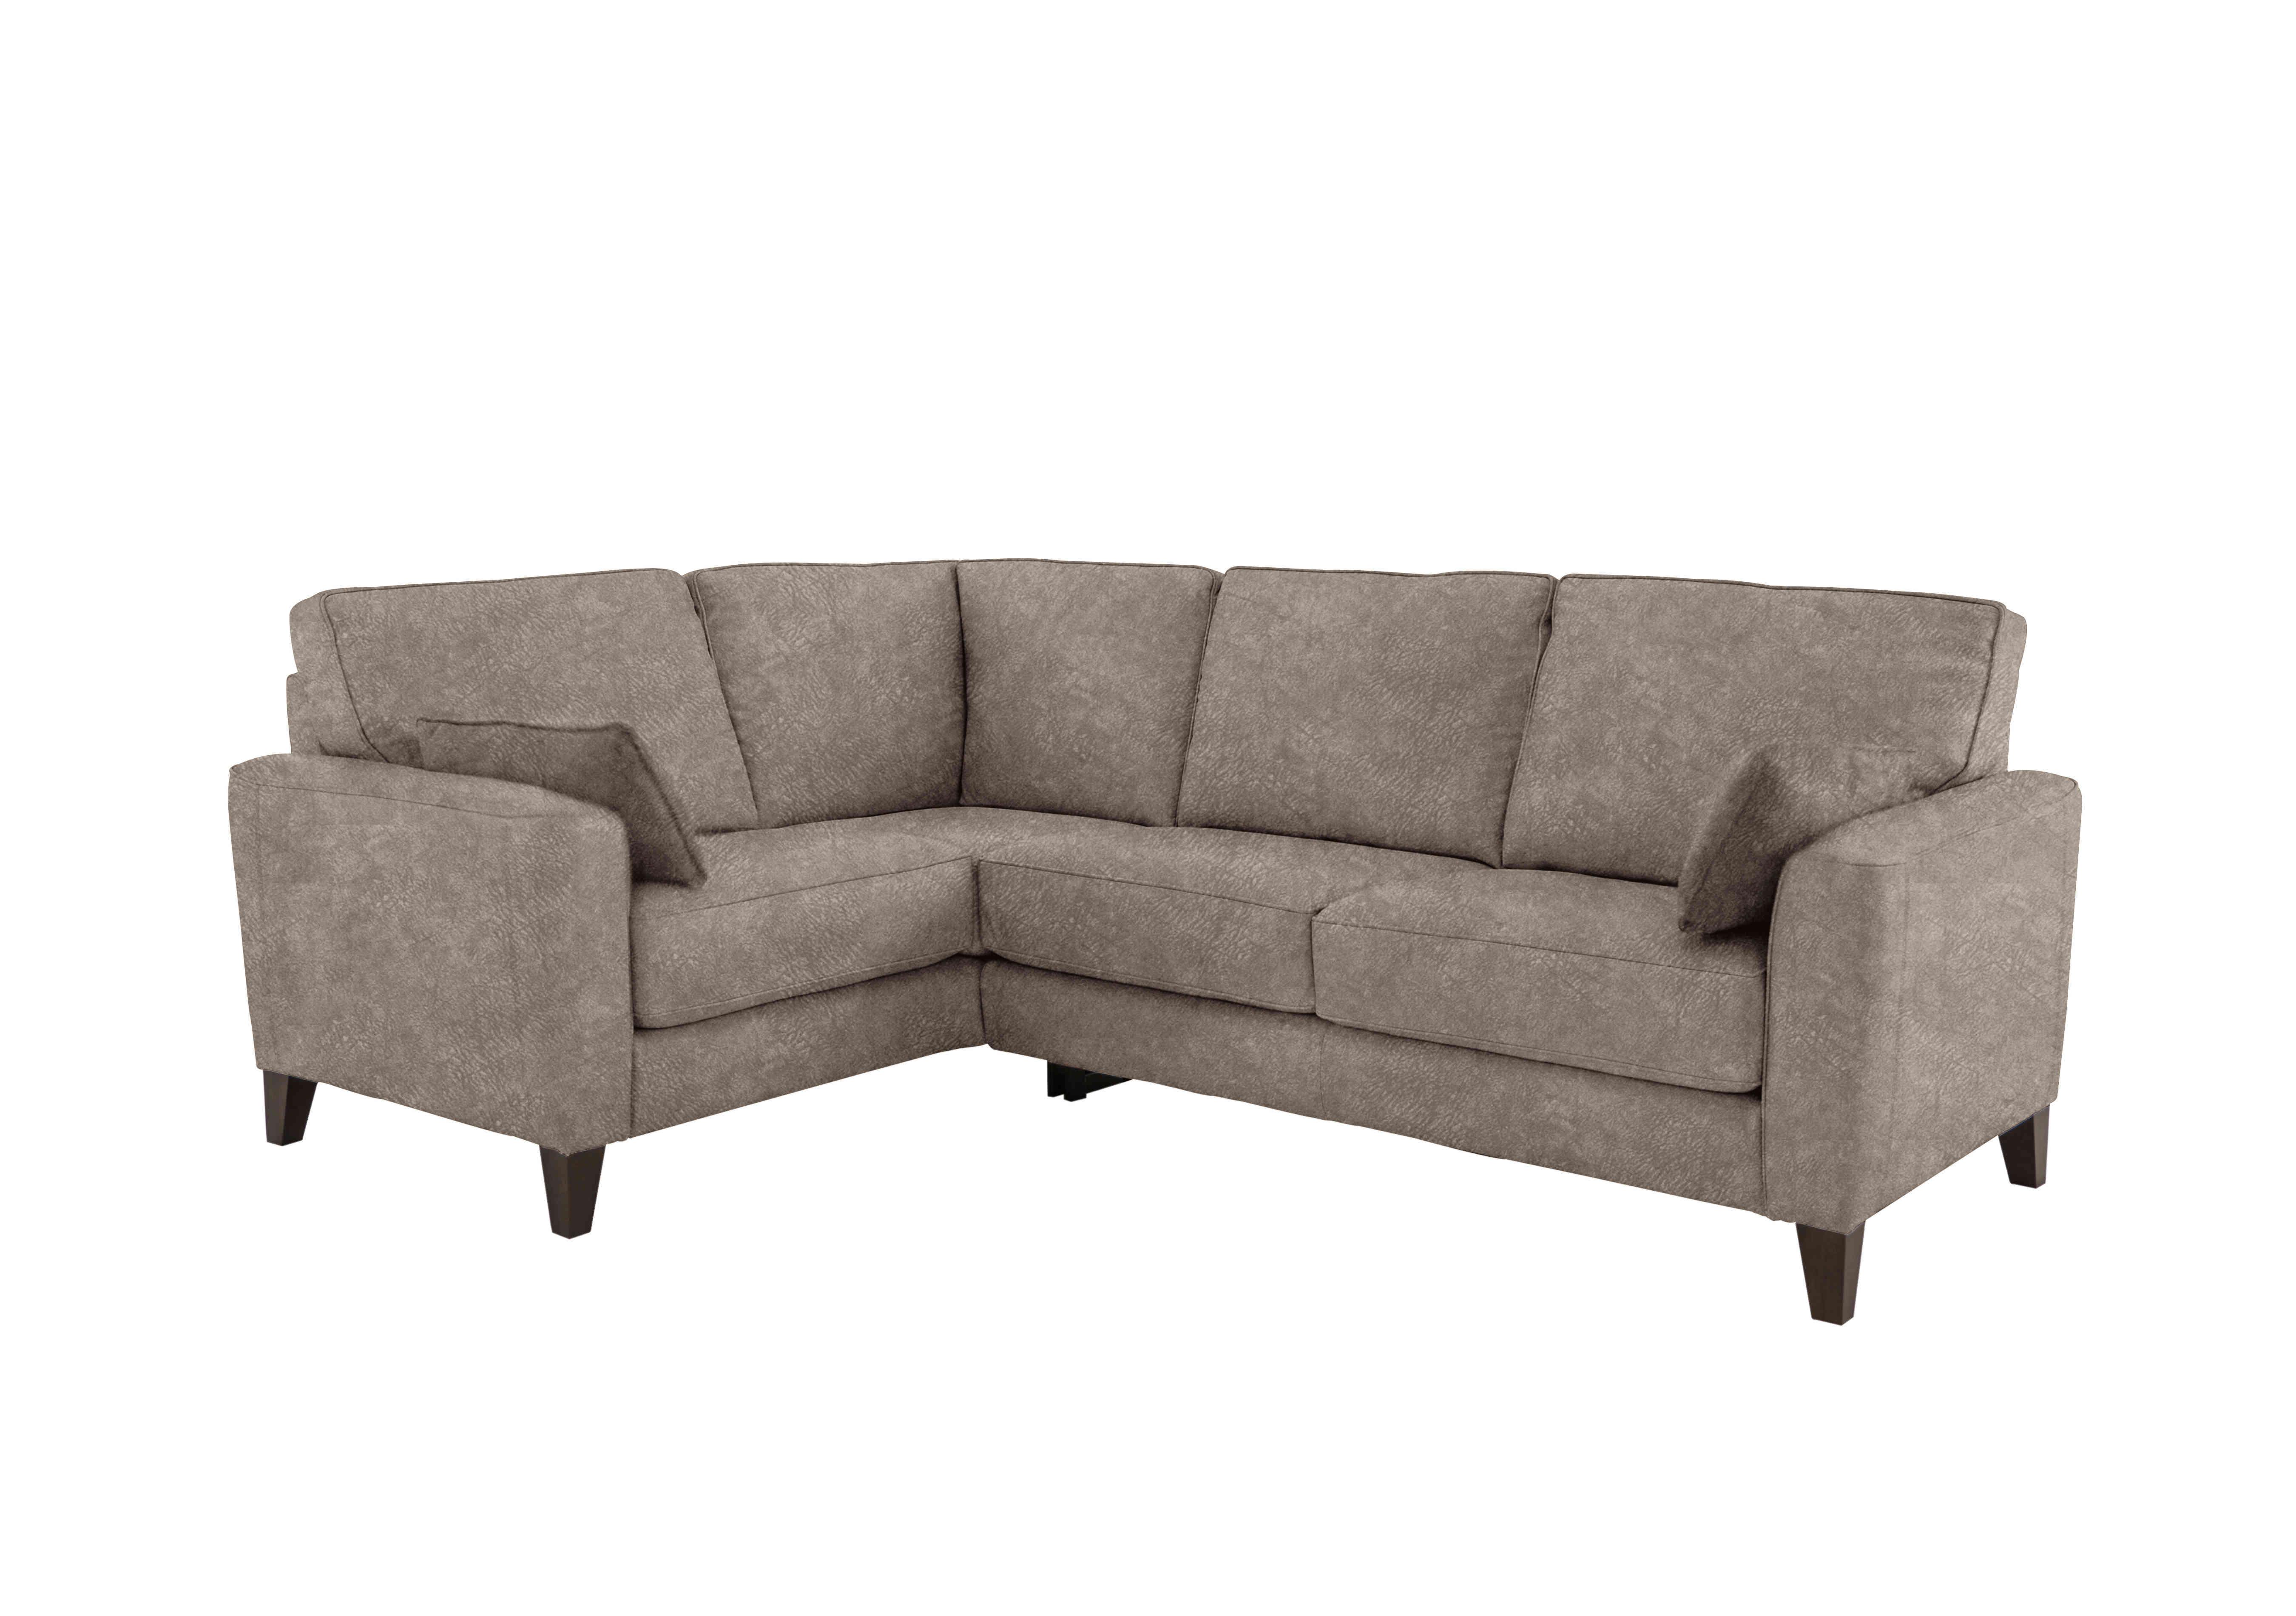 Brondby Small Fabric Corner Sofa in Bfa-Bnn-R29 Mink on Furniture Village